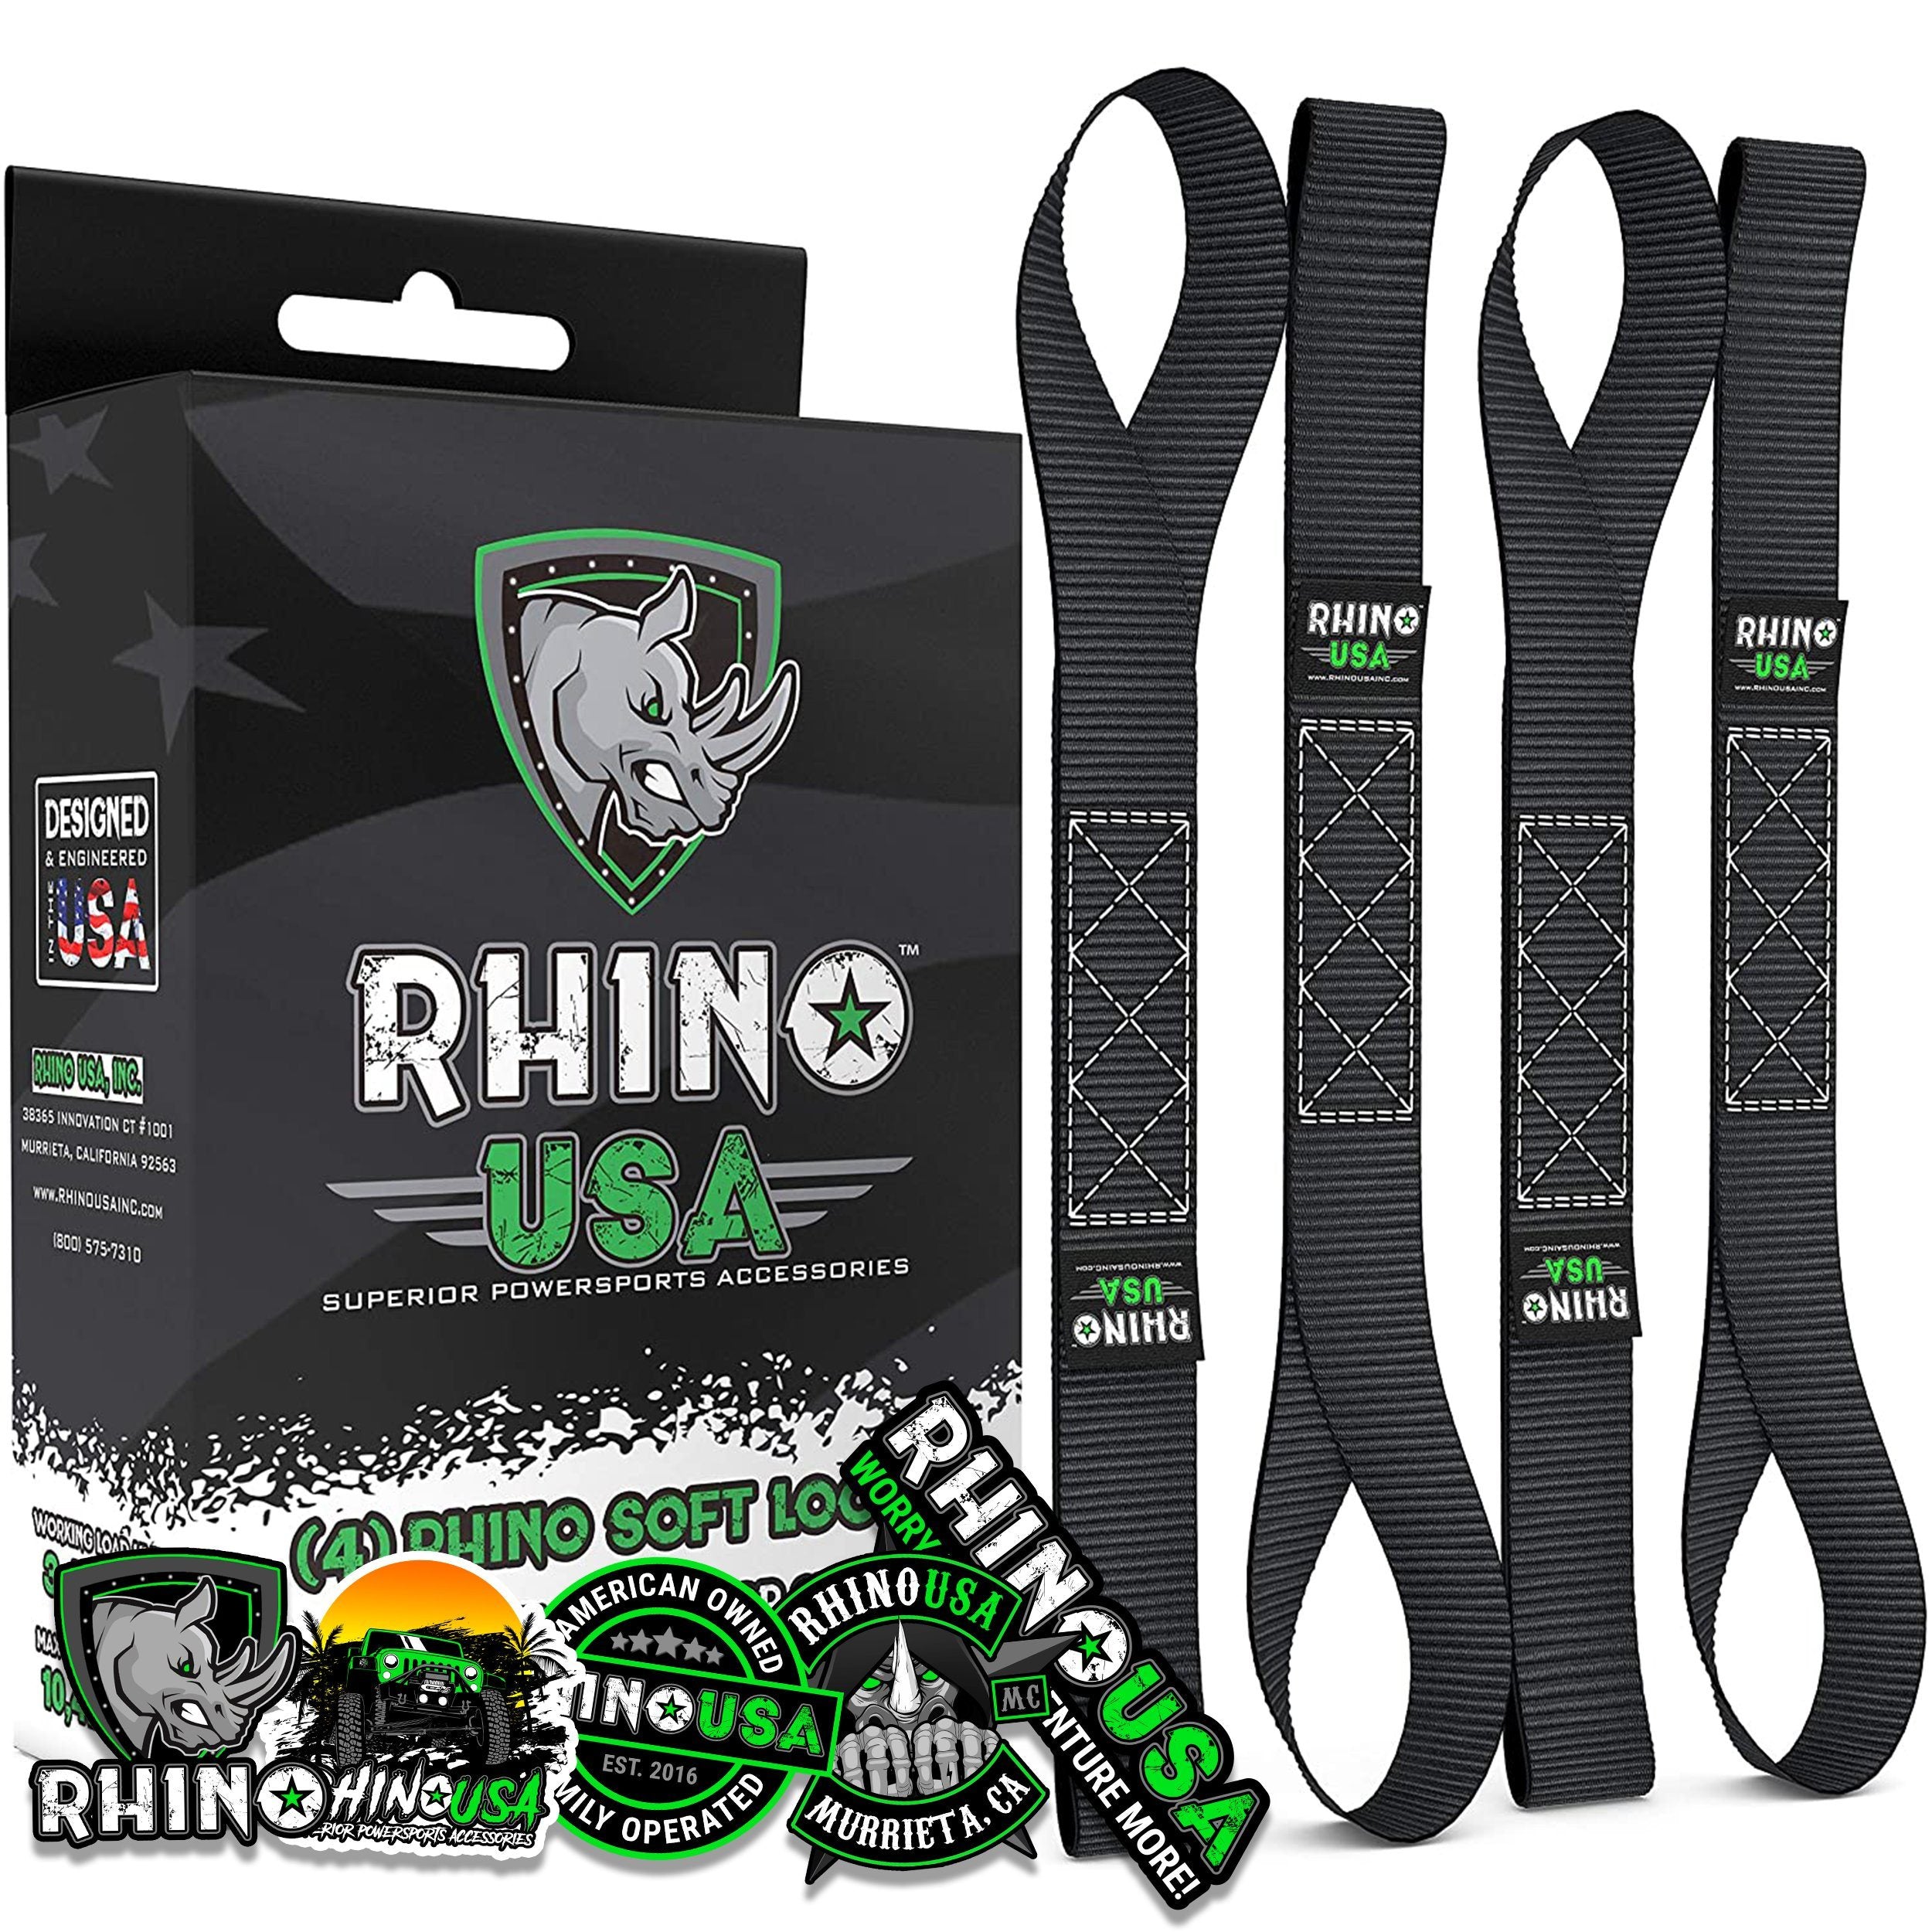 All Products – Rhino USA